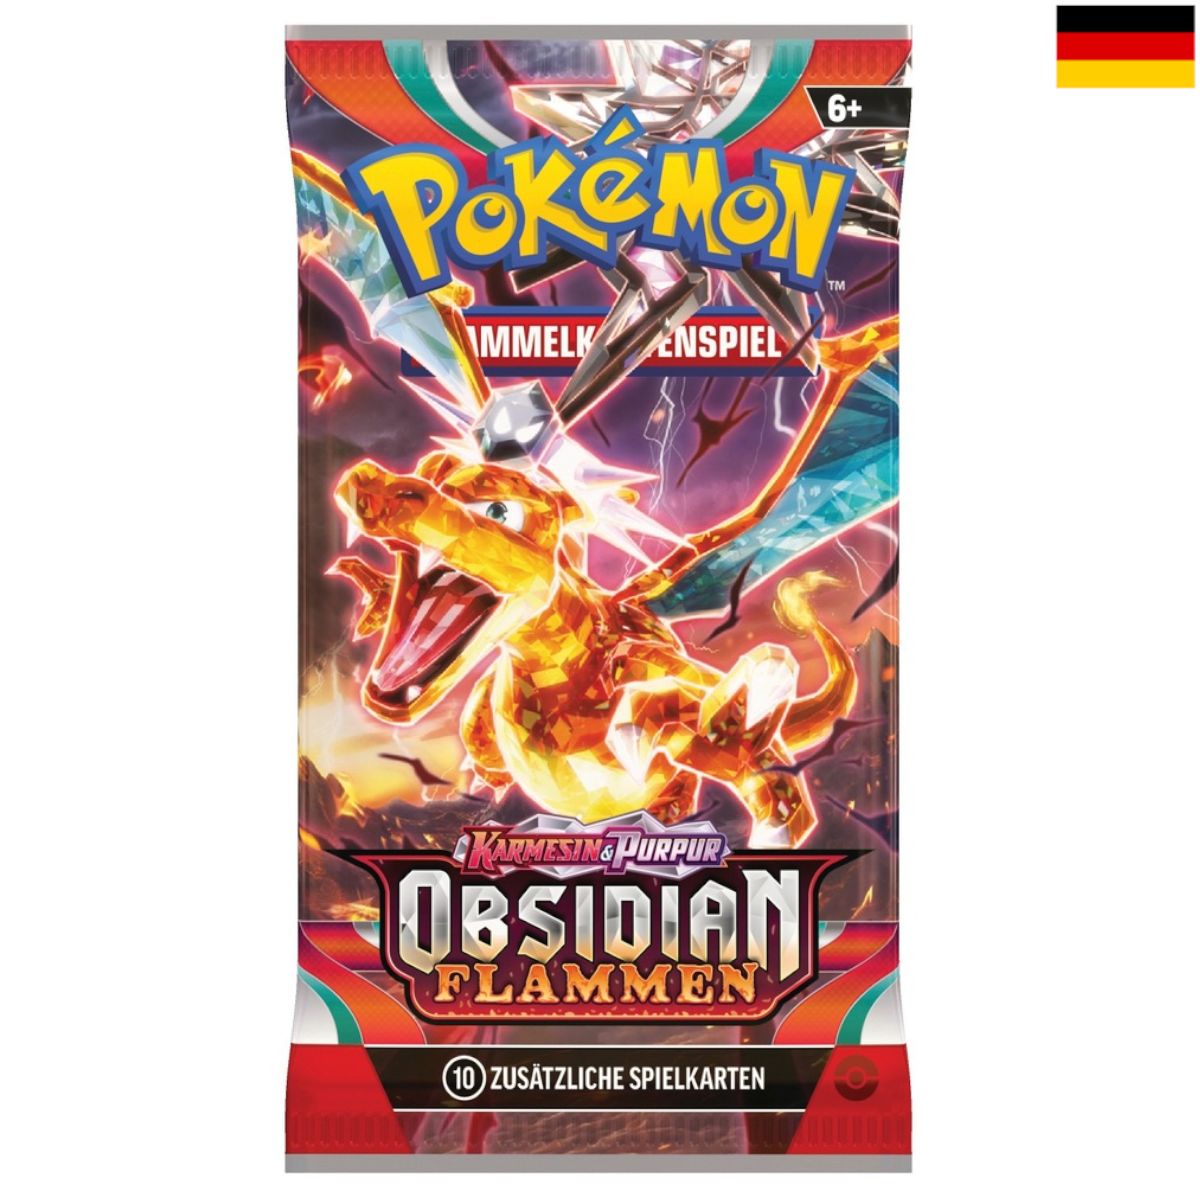 Pokémon - Obsidian Flammen Booster